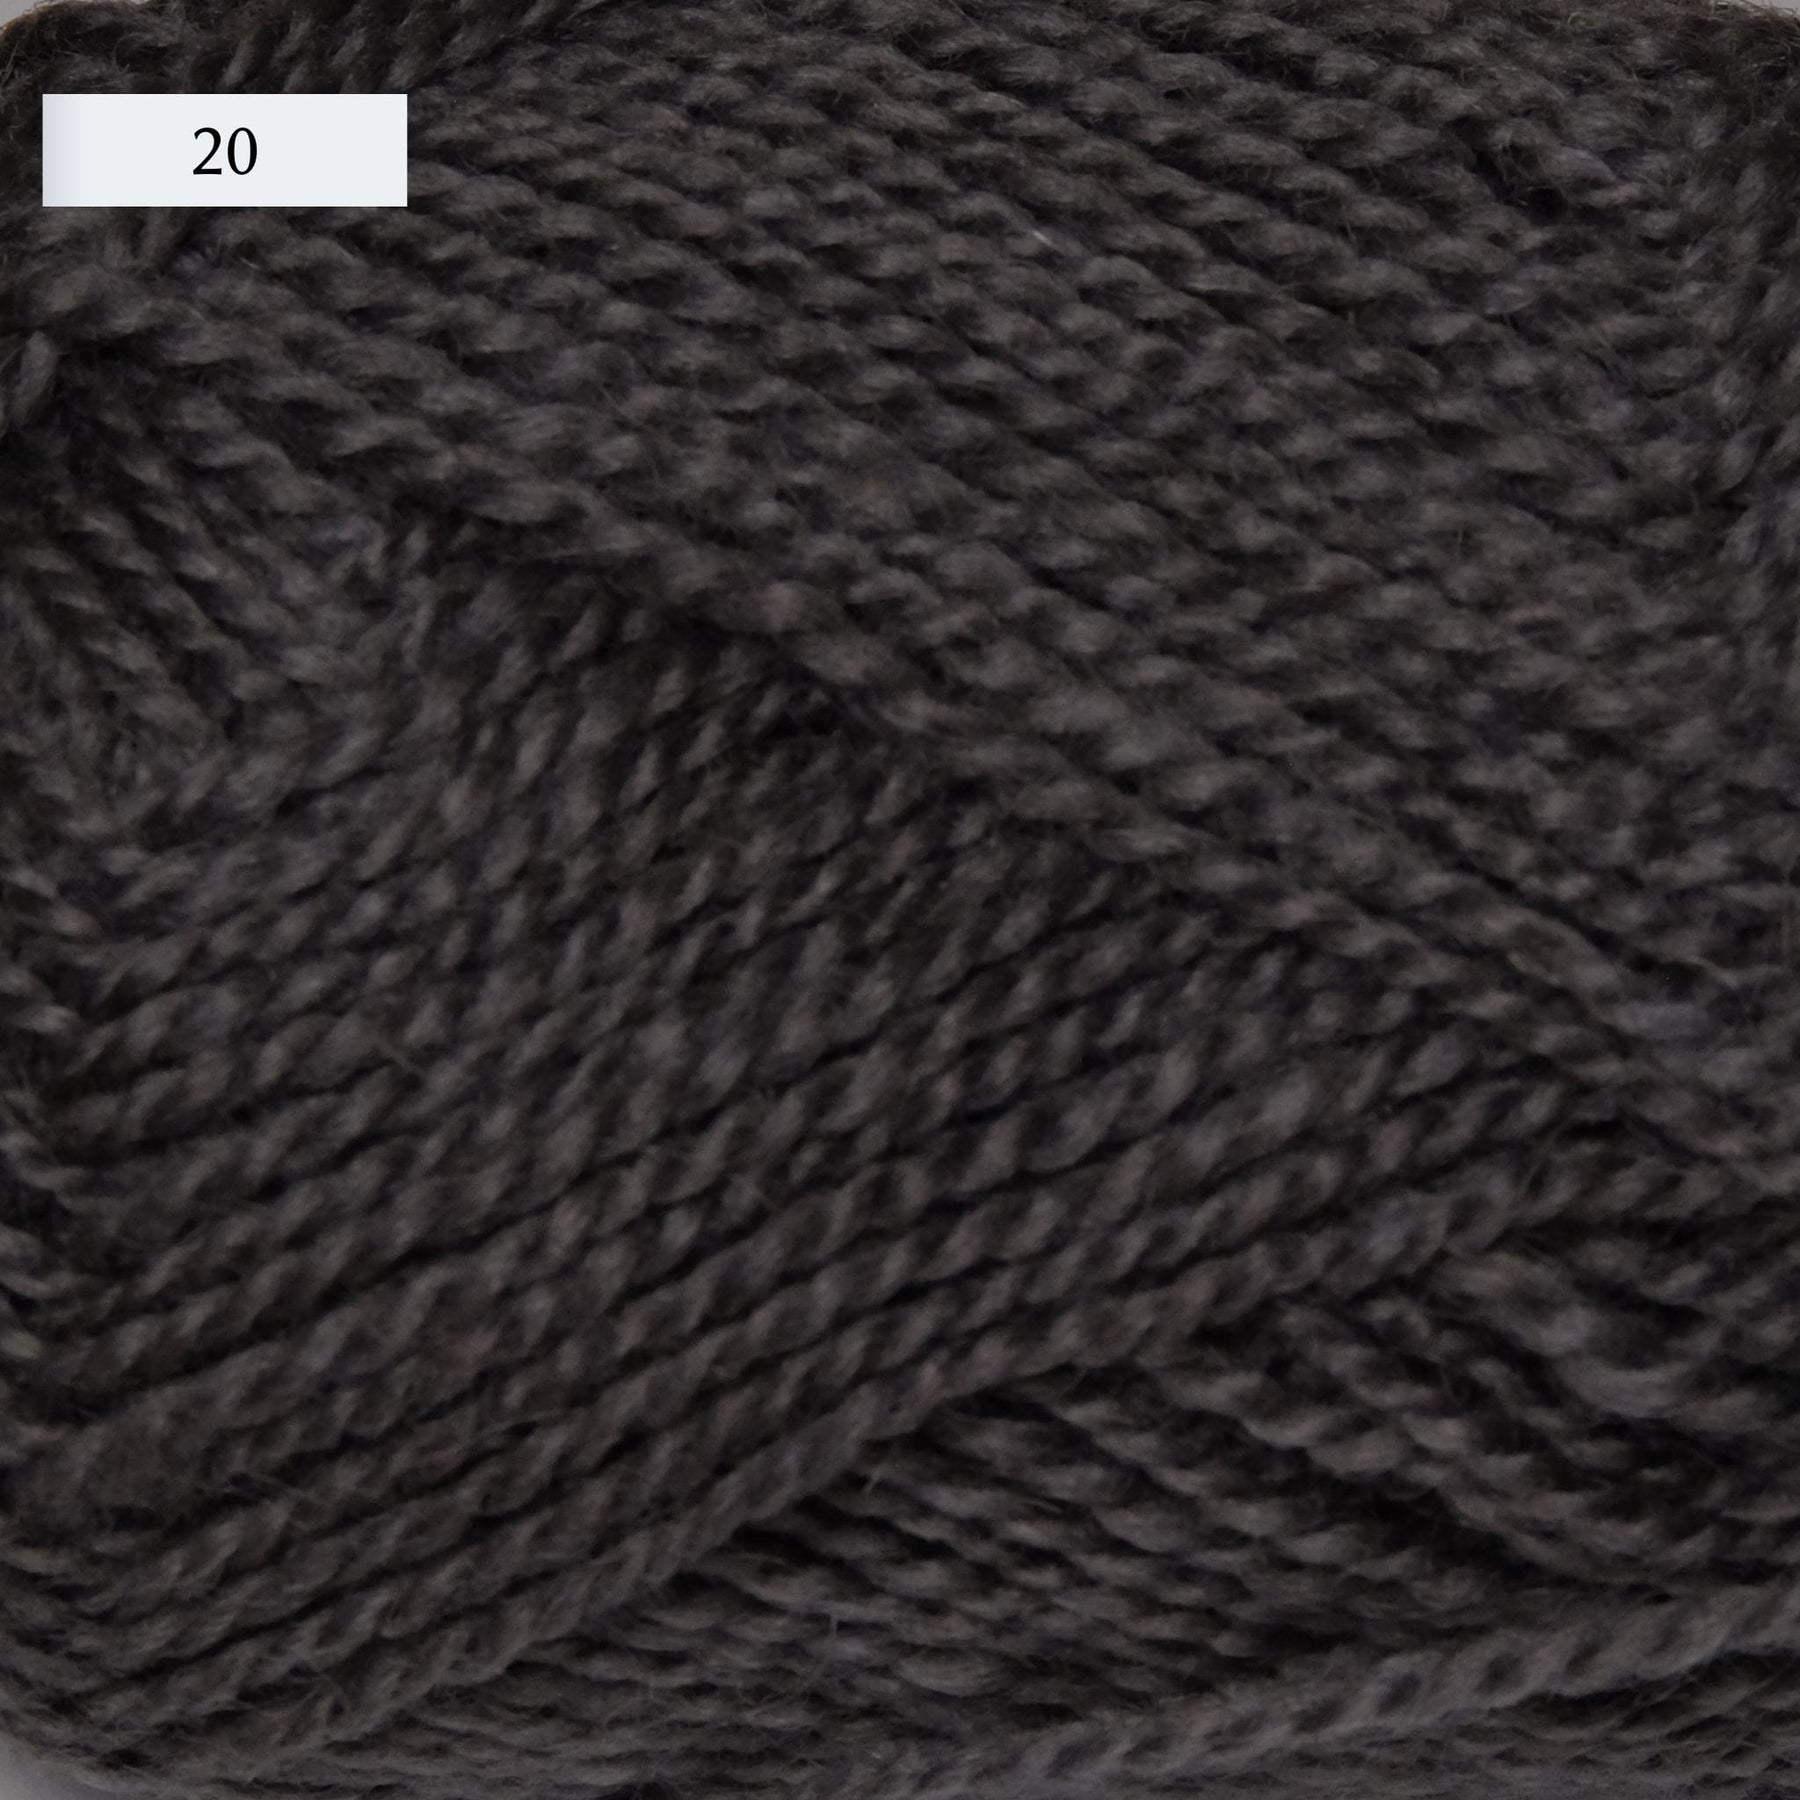 Rauma Vandre Yarn – The Woolly Thistle